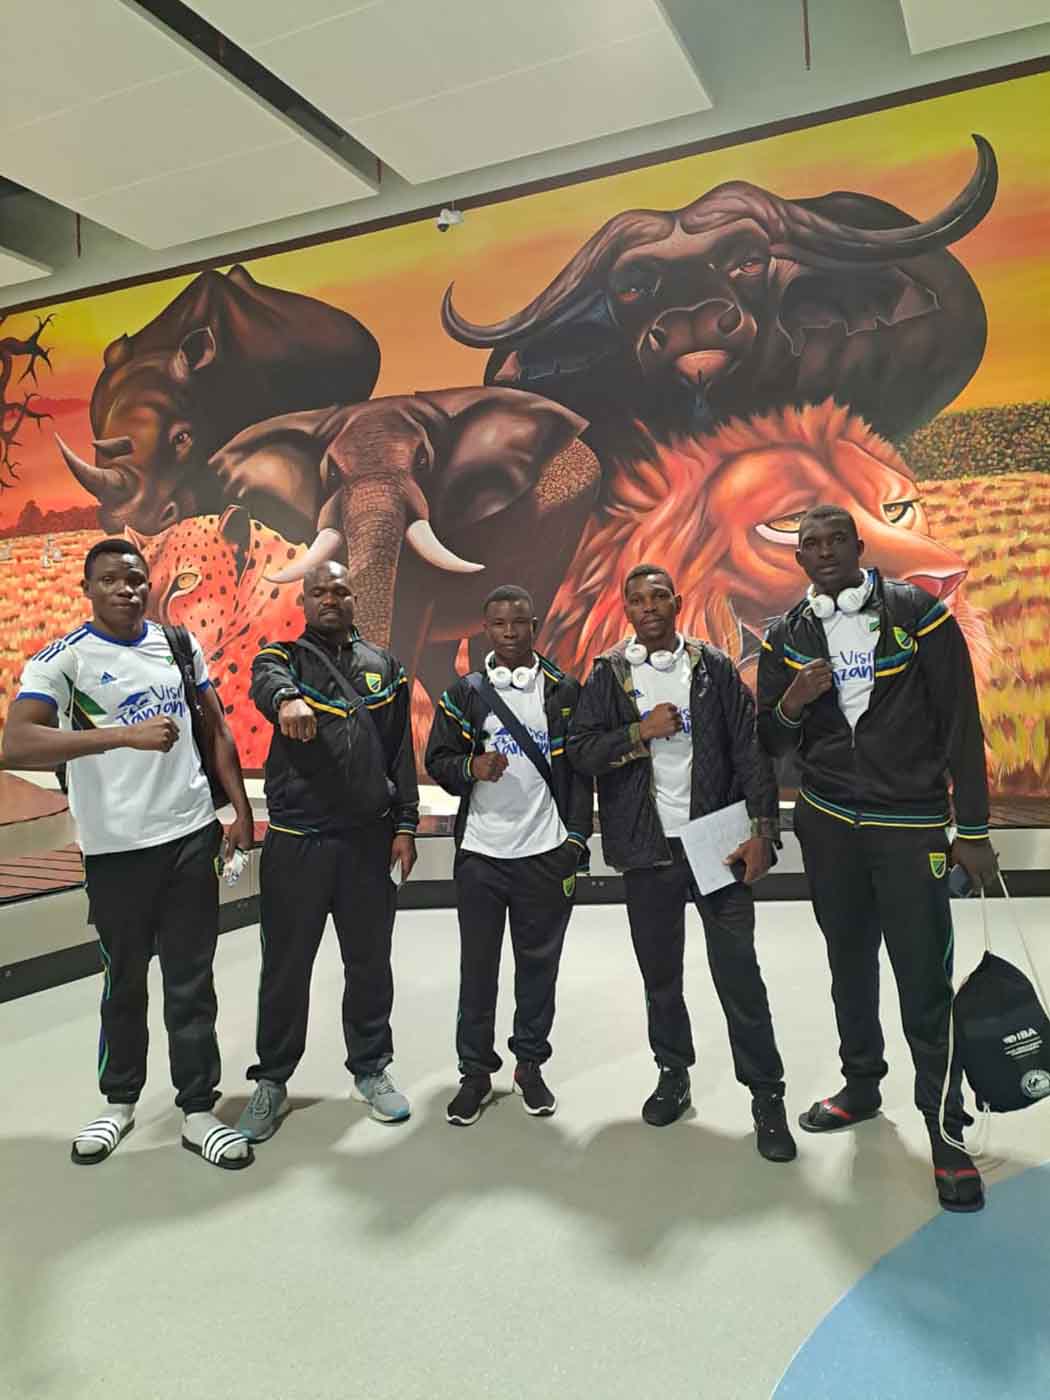 Team Tanzania